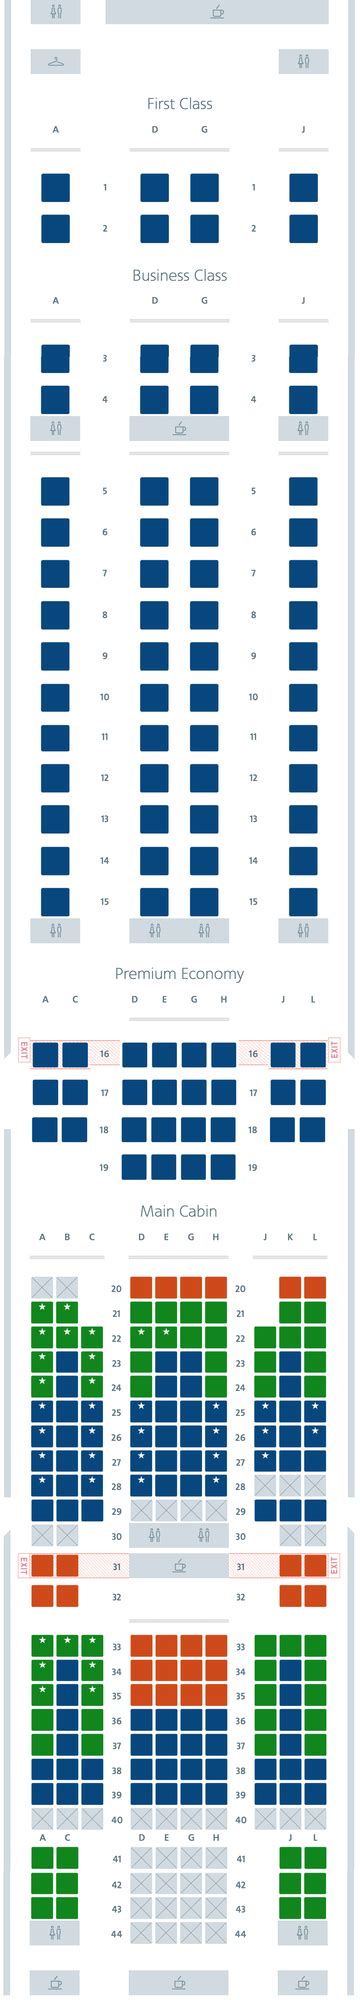 Aa 777 Seat Map